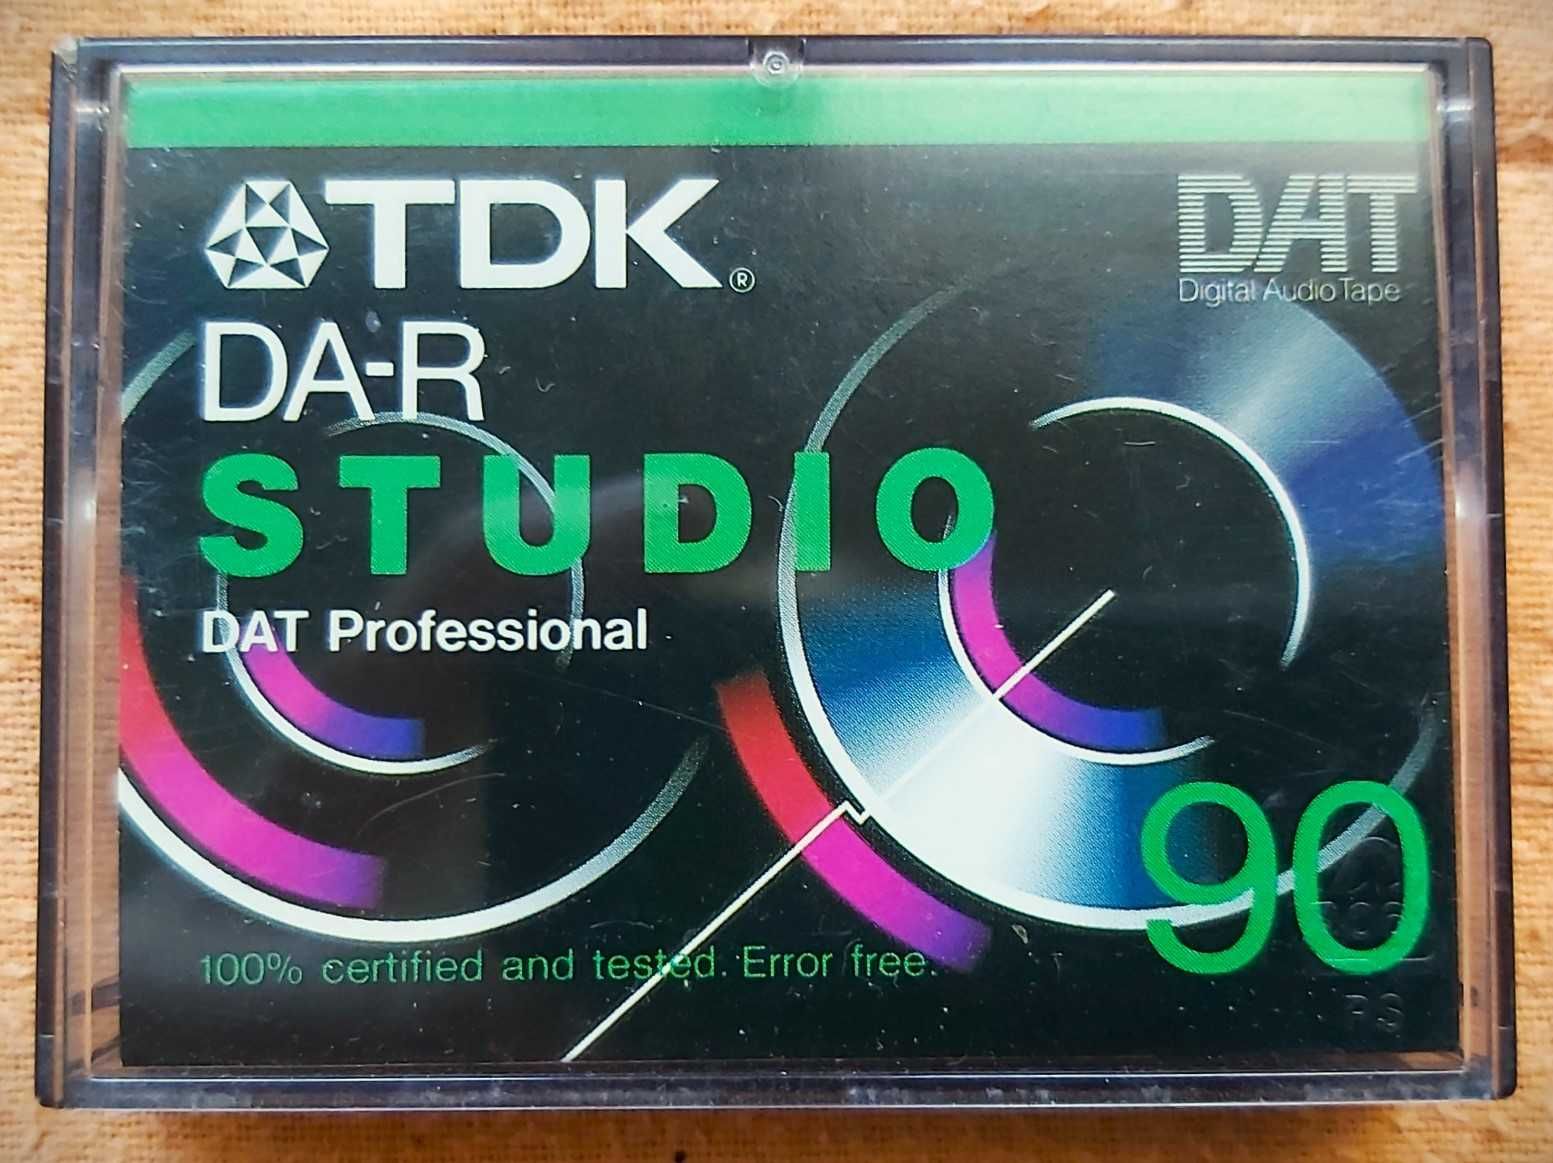 6 x TDK DA-R STUDIO DAT Profissional